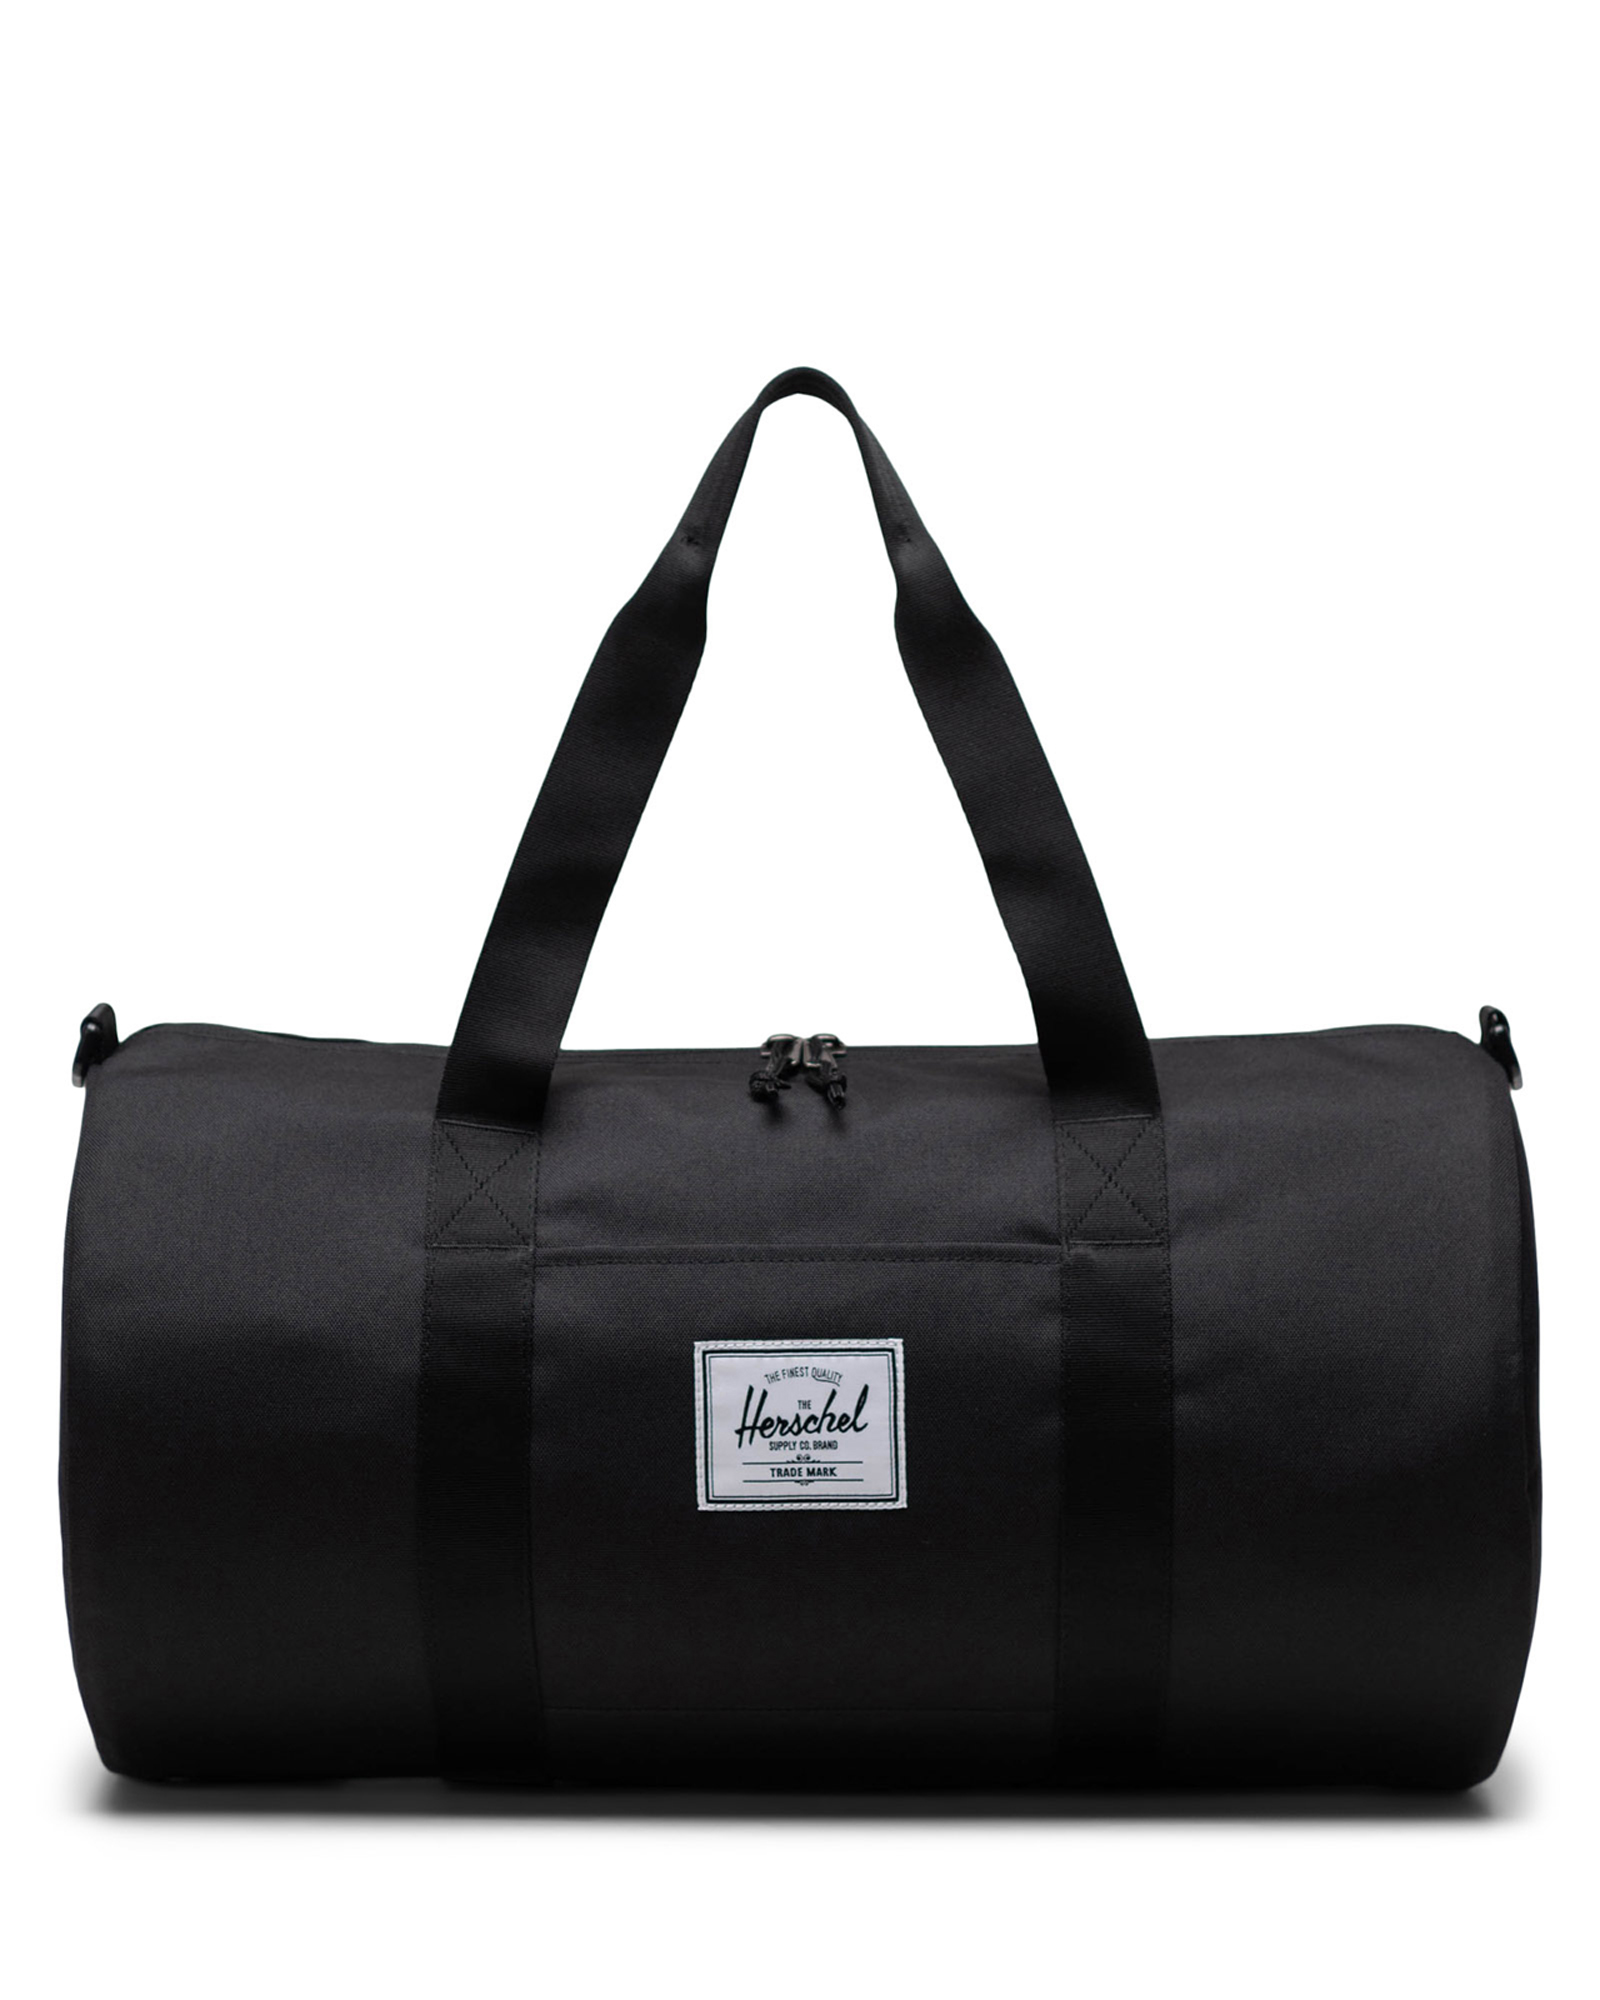 Herschel Classic™ Gym Bag Black | Herschel Supply Co.